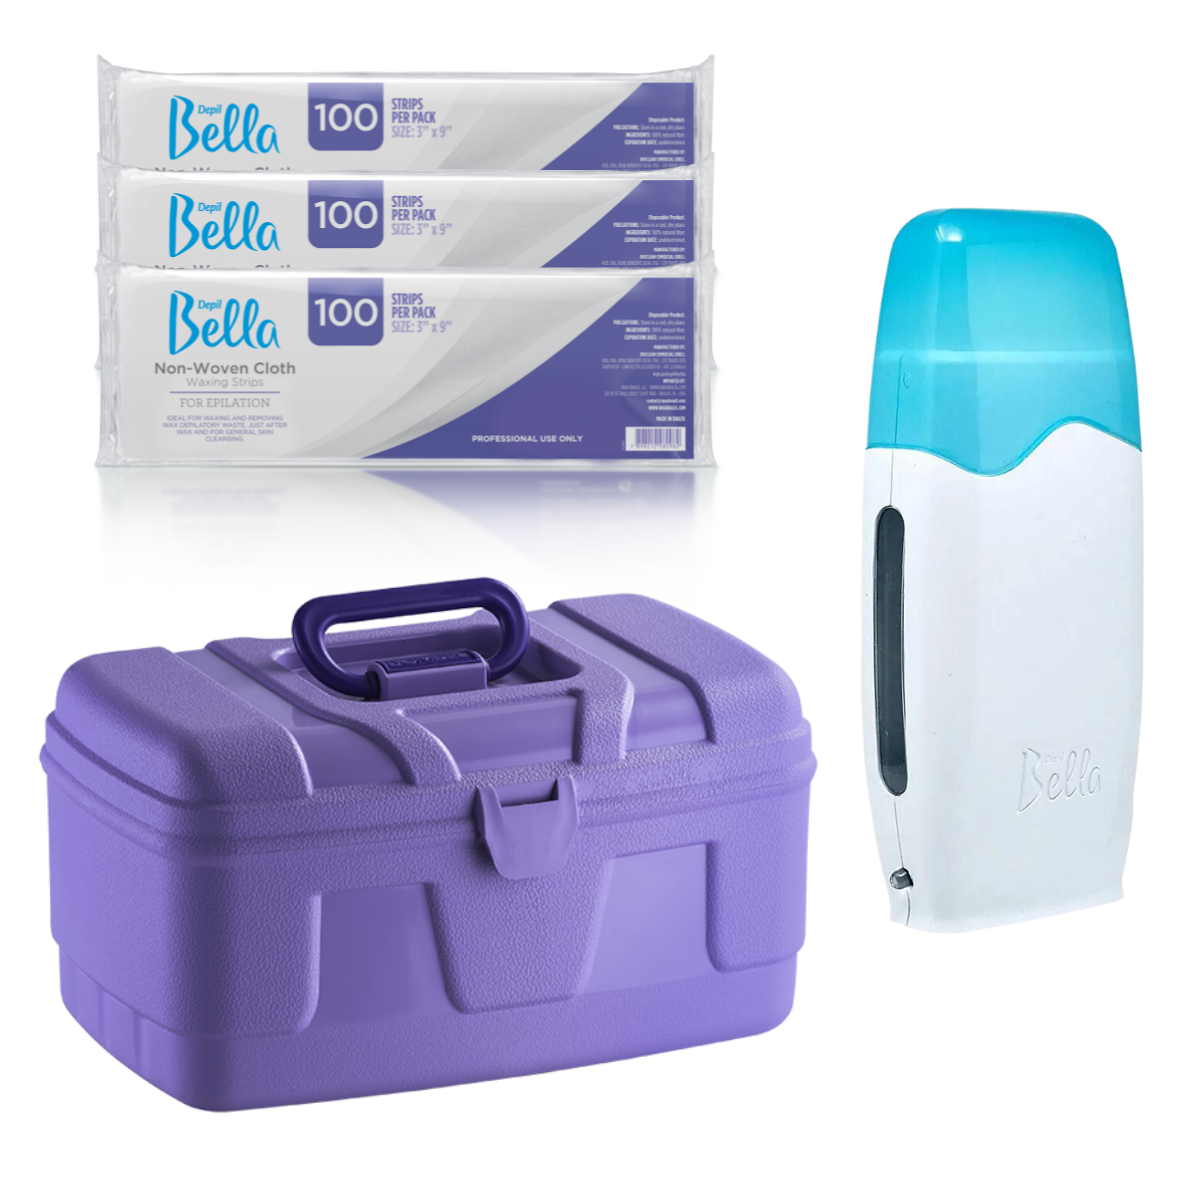 Depil Bella Bundle - 3 Non-Woven Cloths, Automatic Warmer Device, and Purple Plastic Case